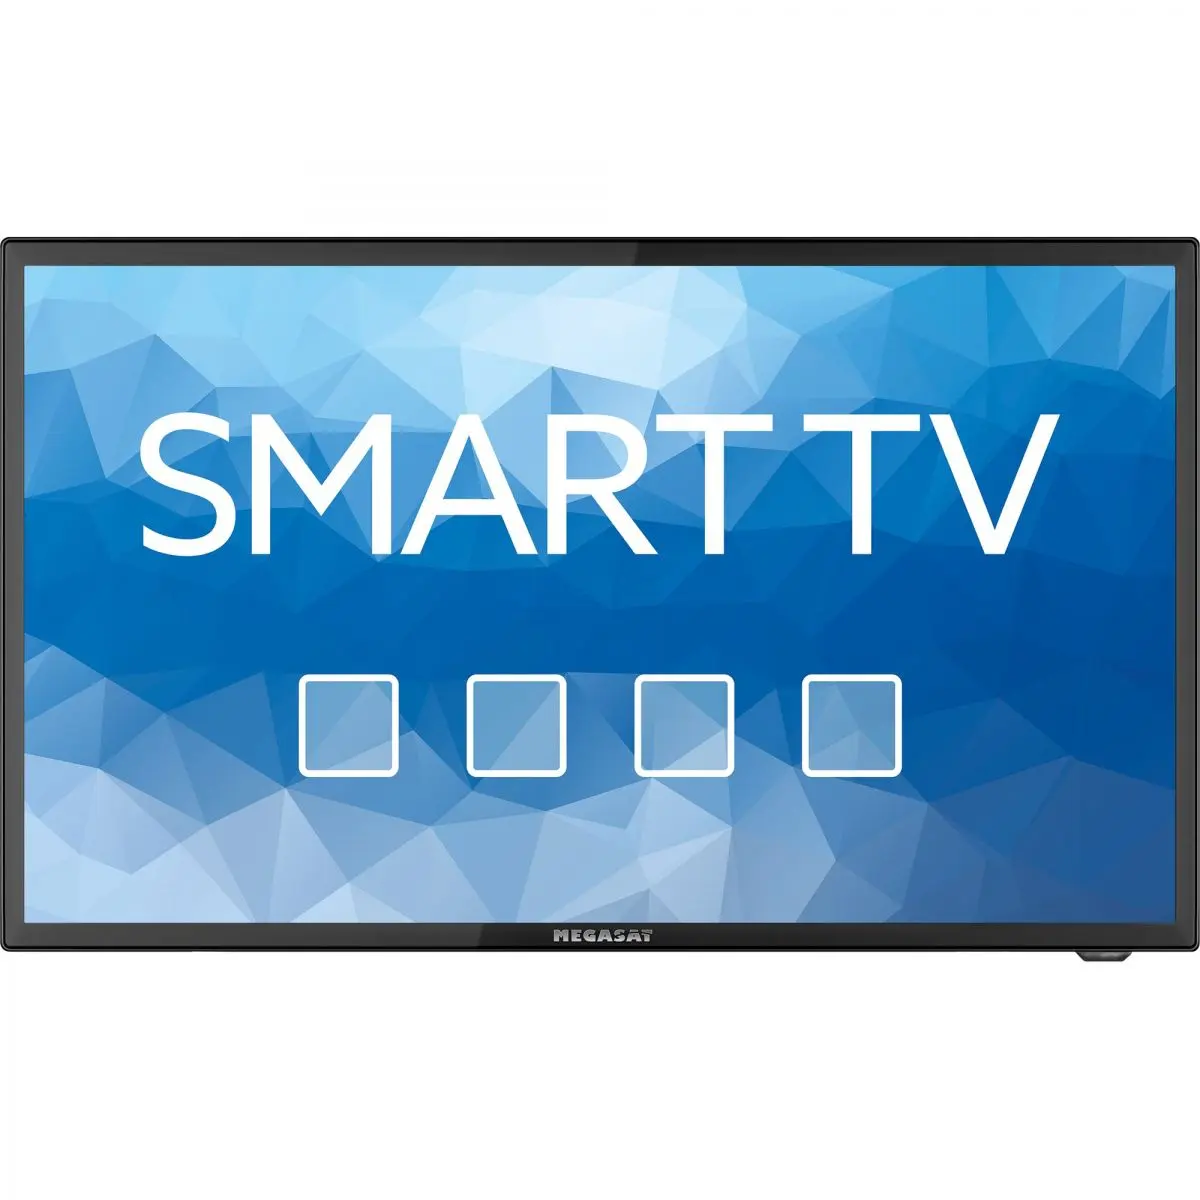 TV Megasat Royal Line III 22 Smart, 12 / 24 / 230 V